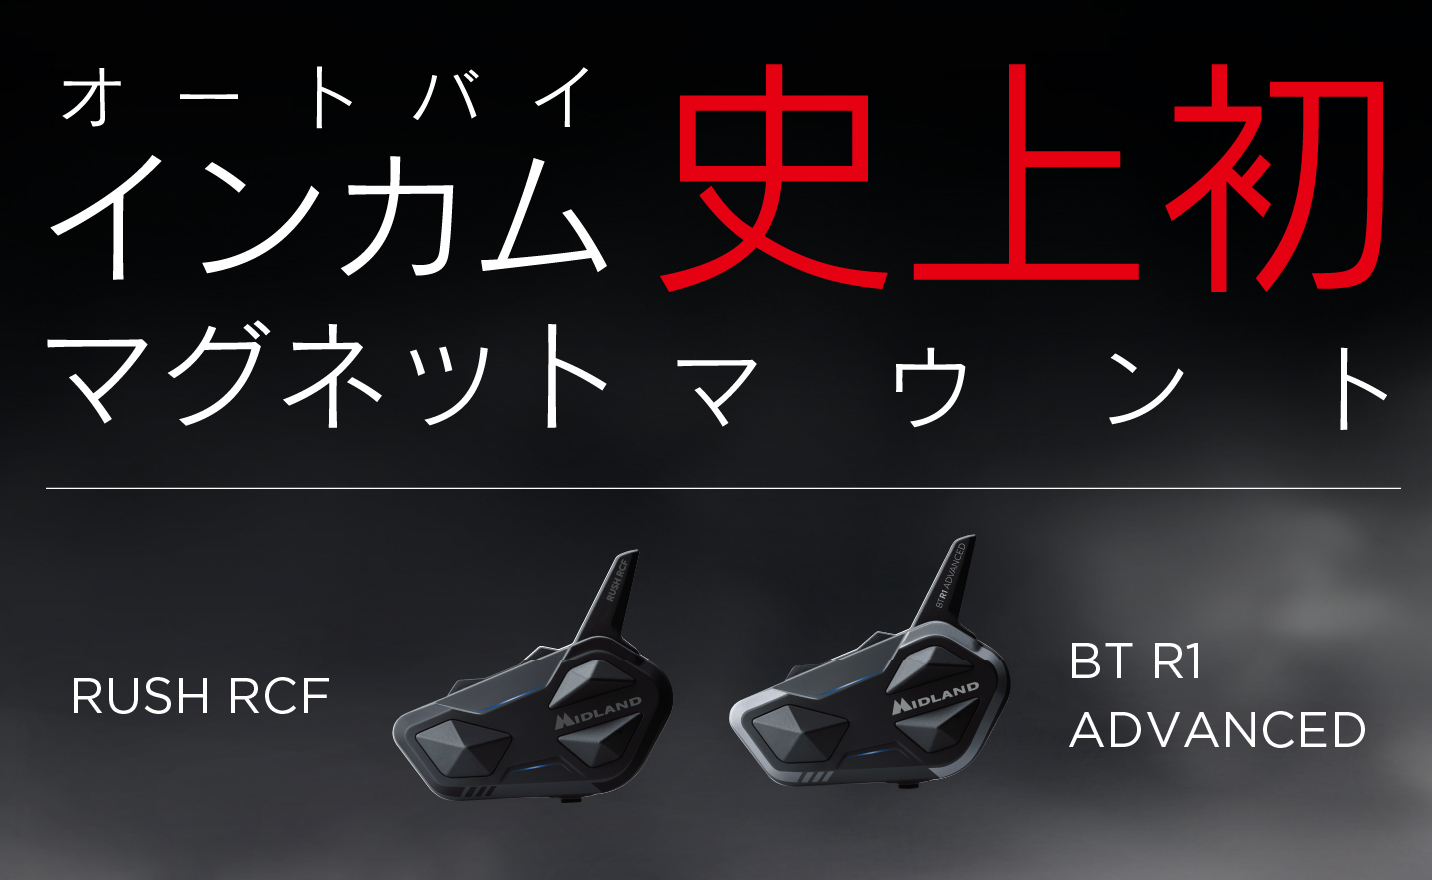 BT R1 ADVANCED | インターカム | MIDLAND Japan | 公式サイト 